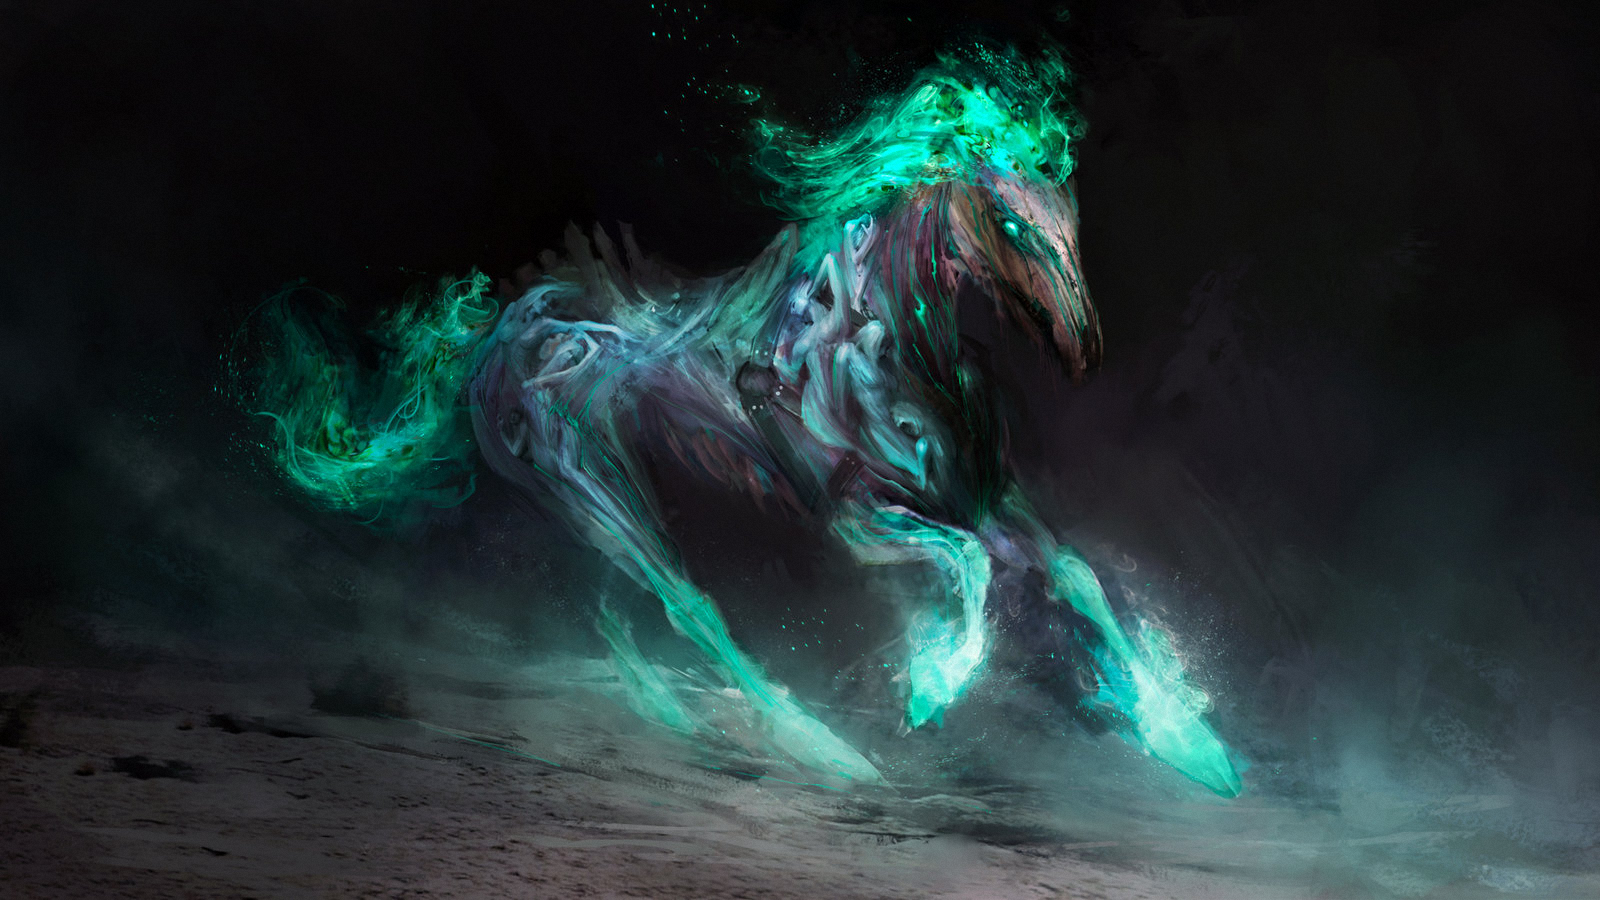 Turquoise fire Horse by Daniel Kamarudin